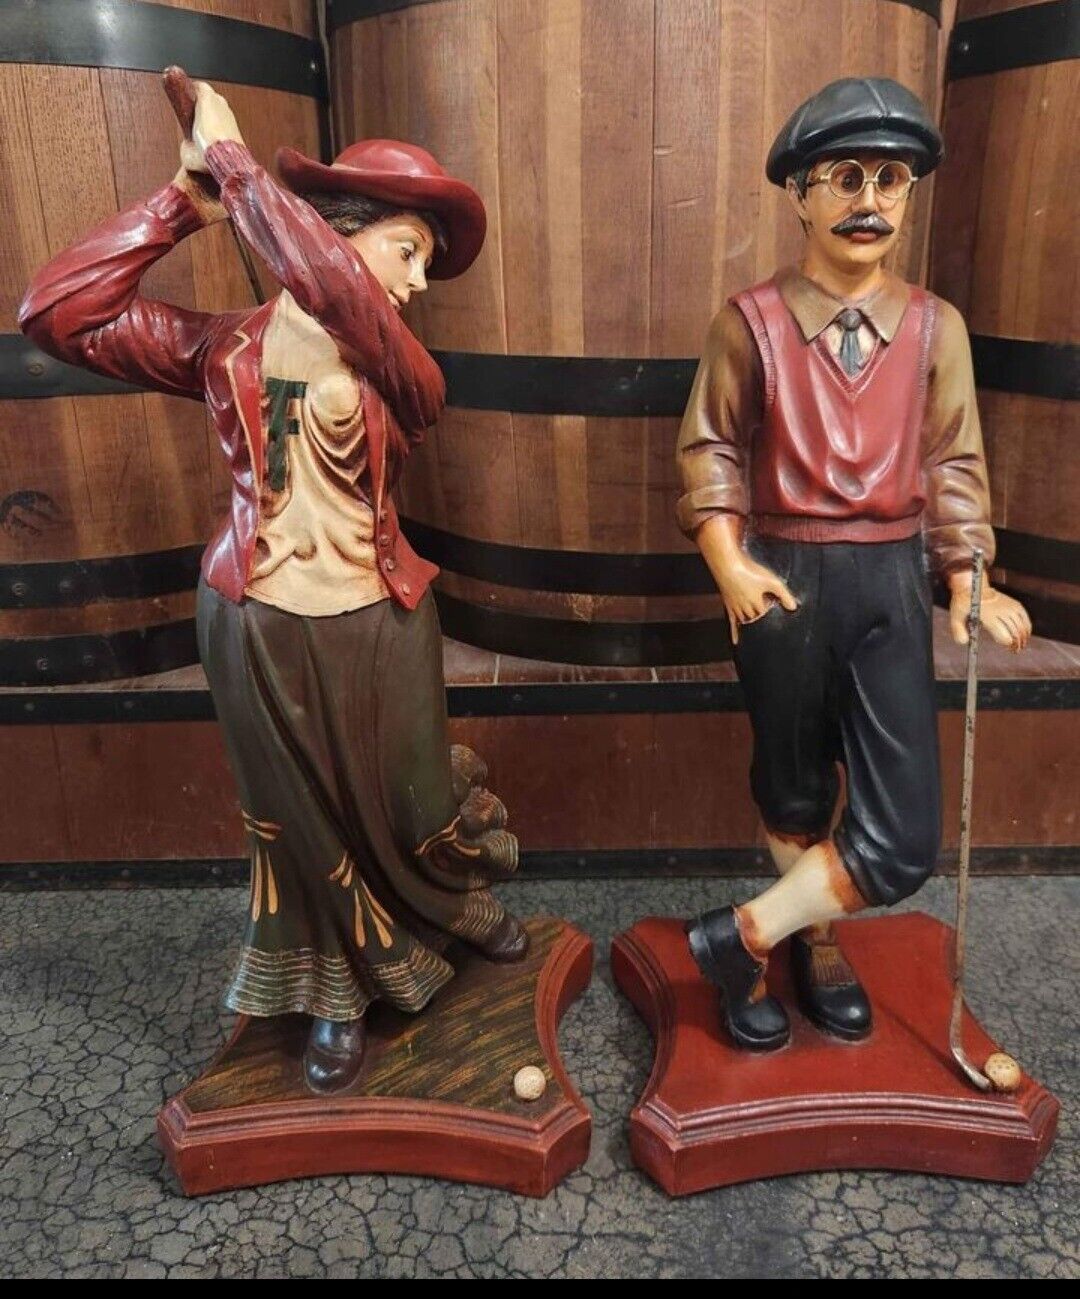 Antique Golfers Pair of Man & Woman Resin Figurines 27